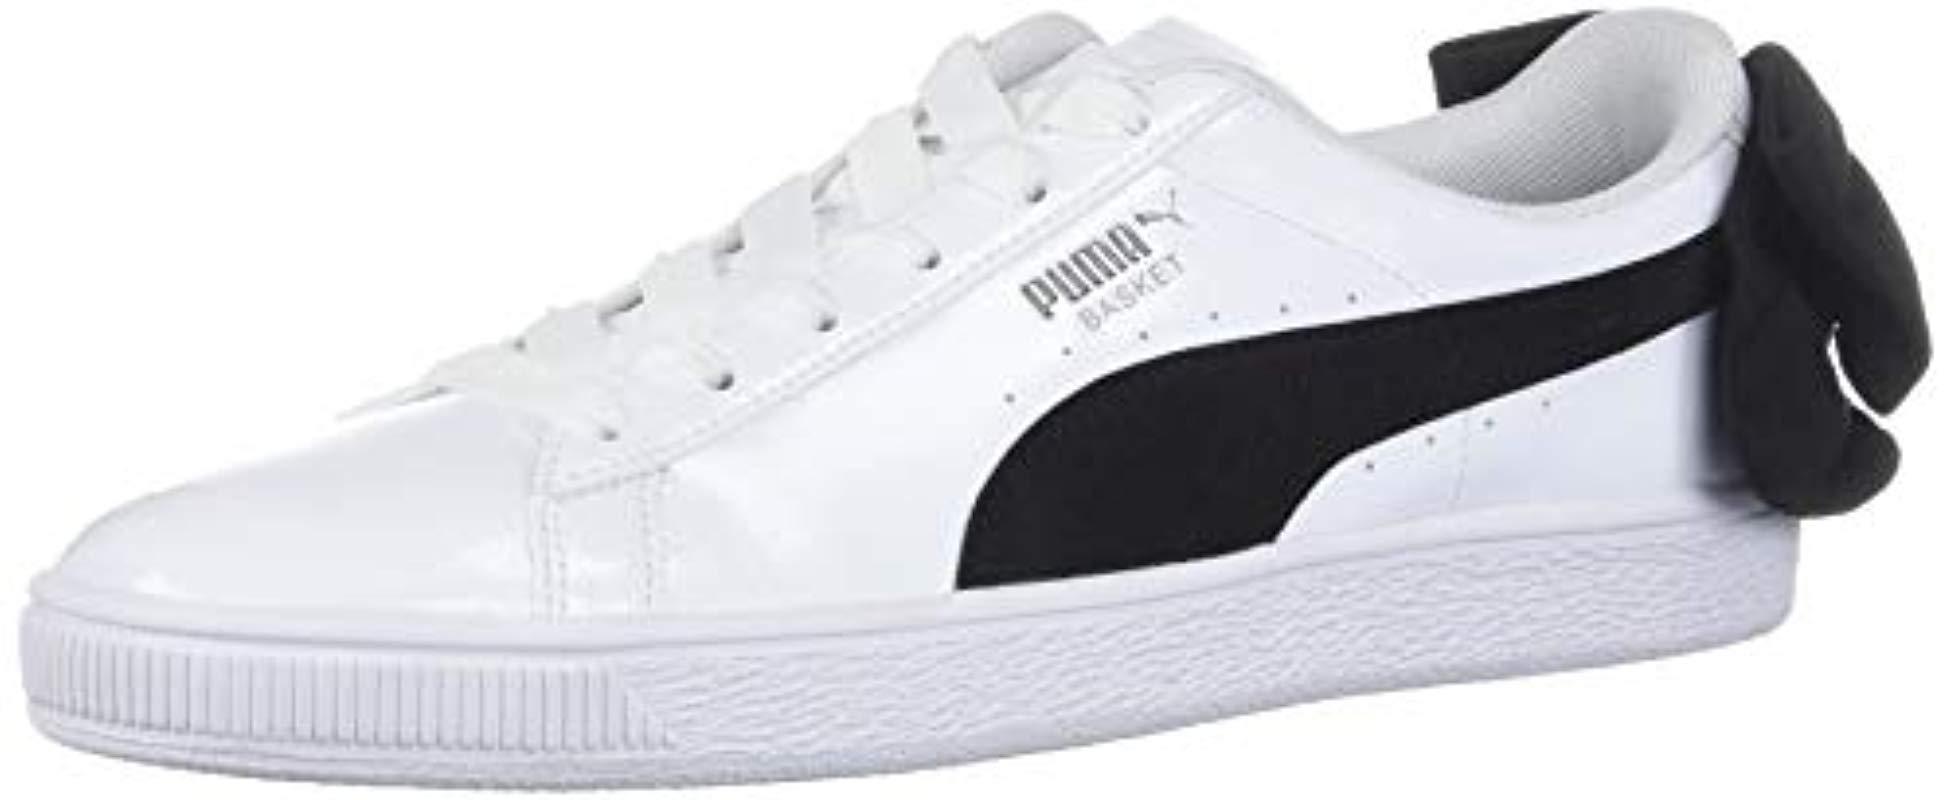 puma white bow sneakers